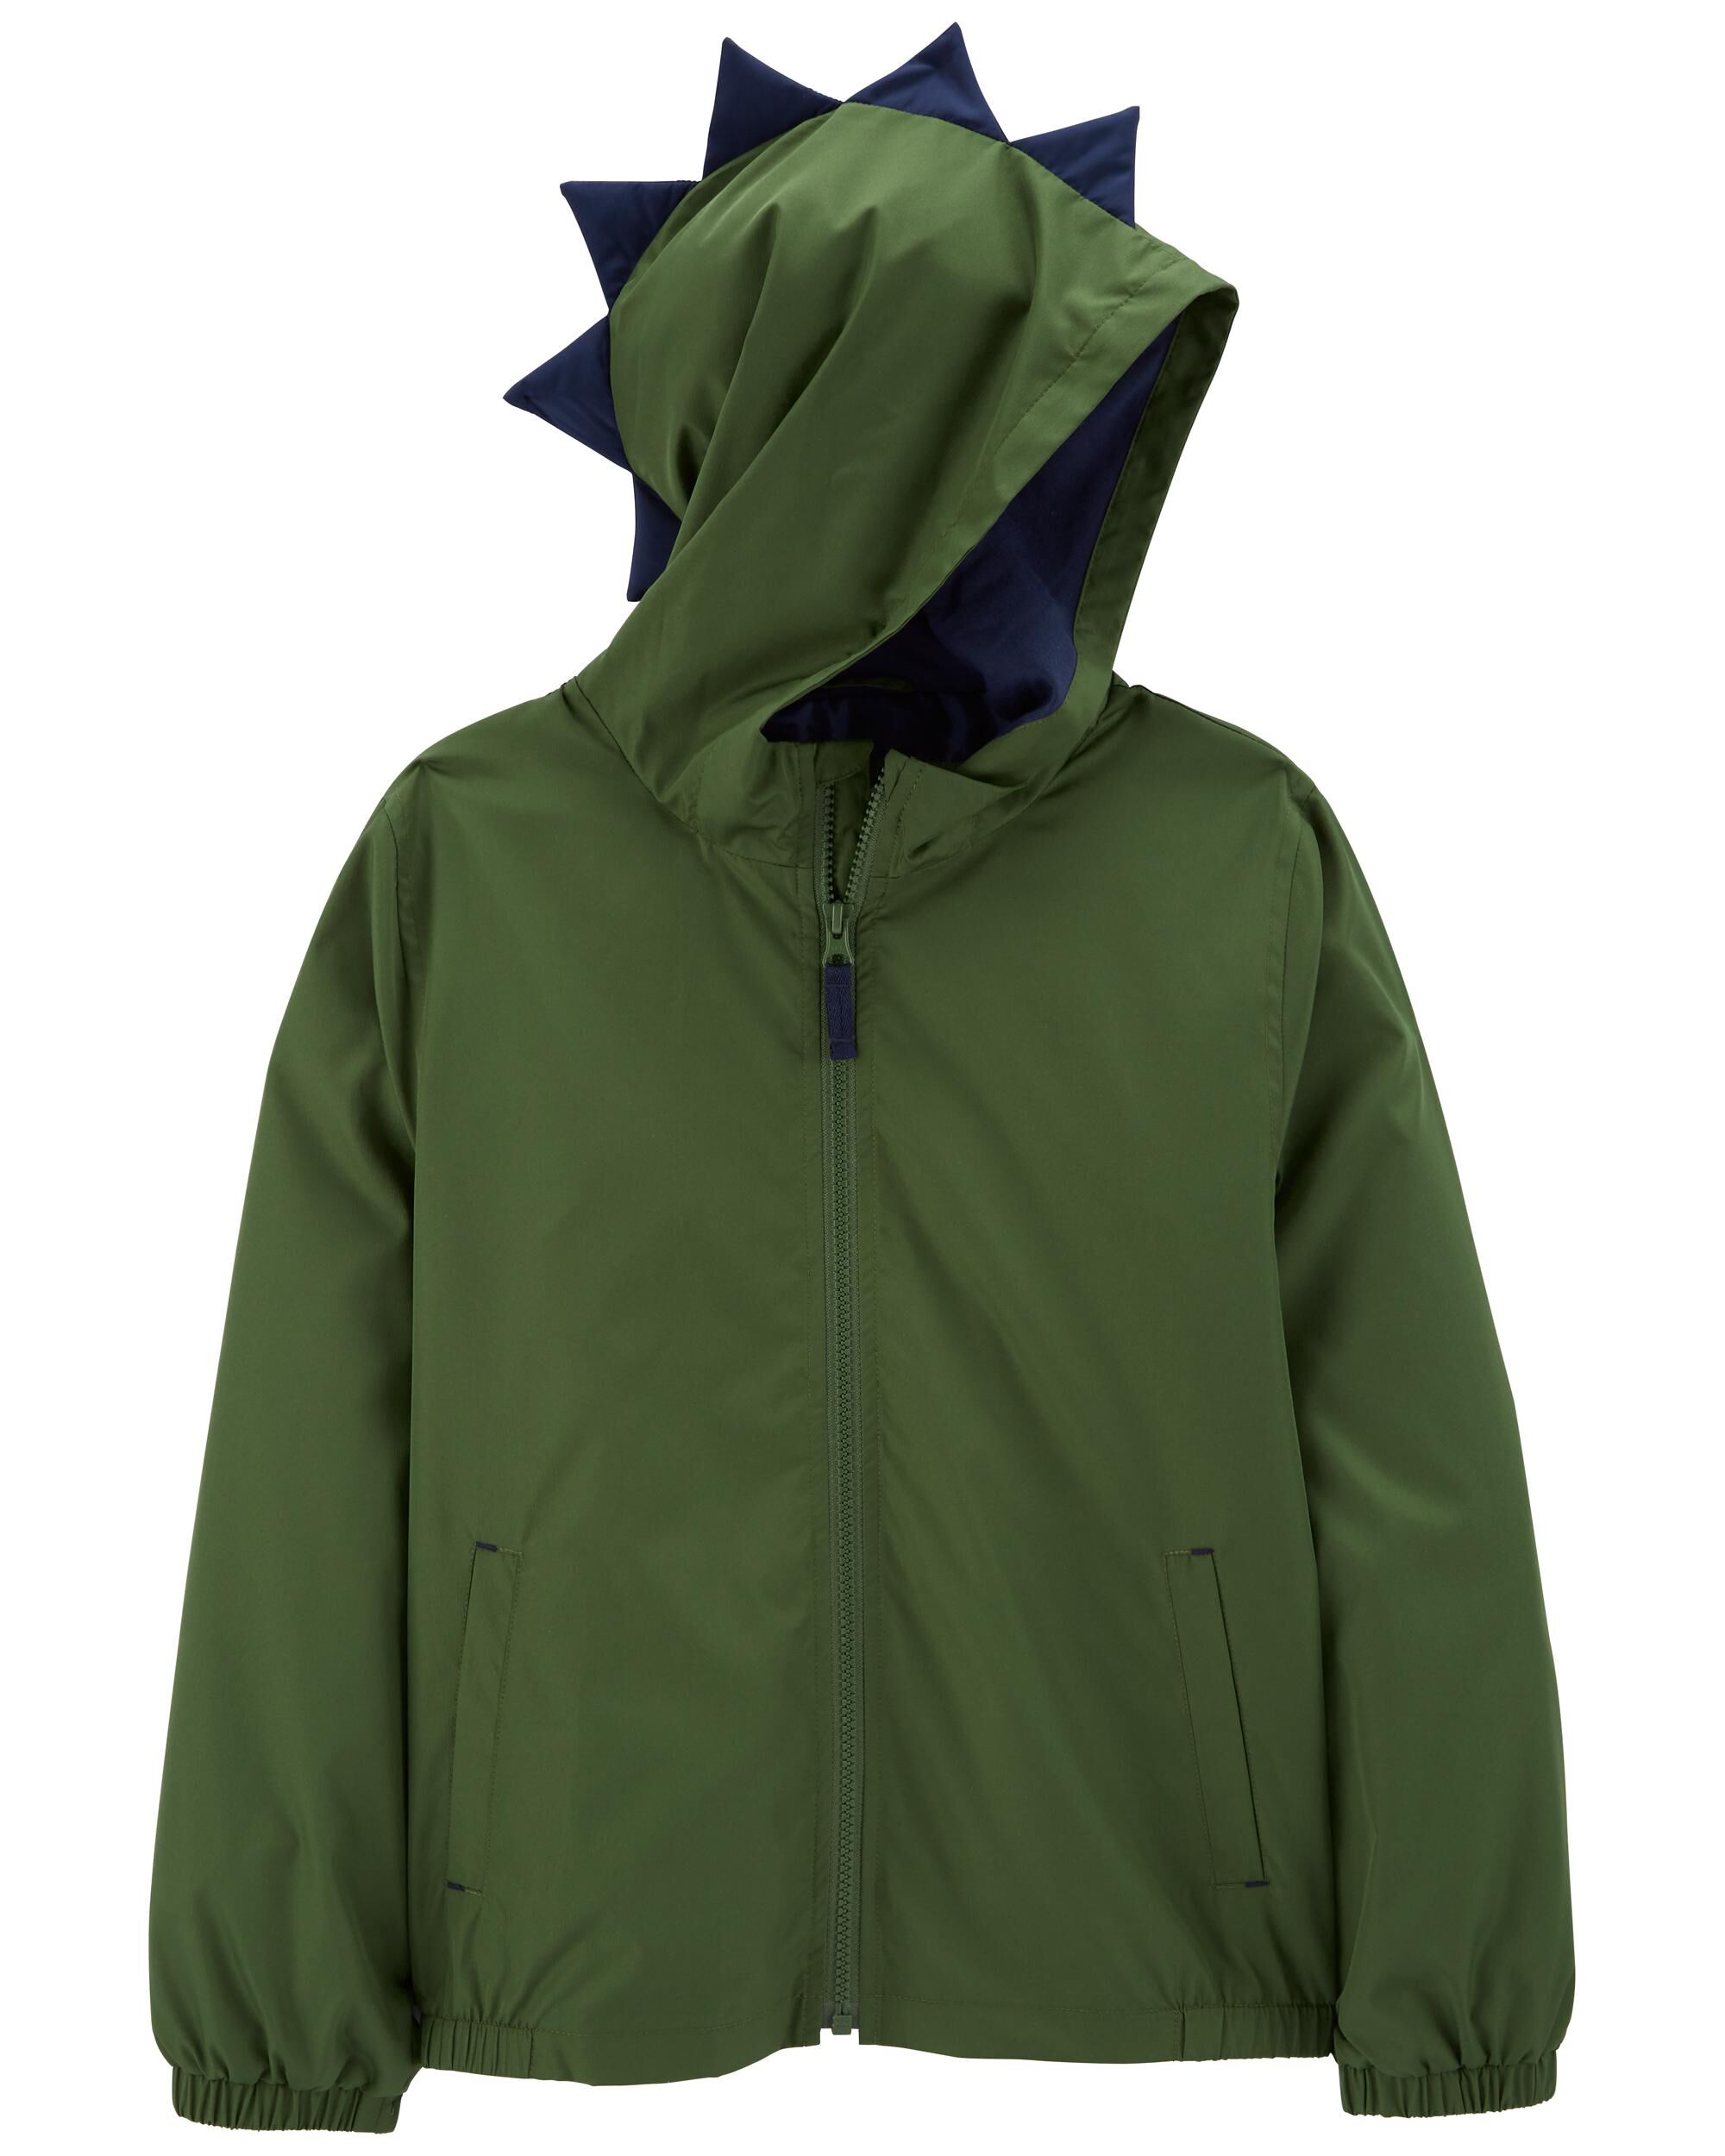 discount 65% Green 6Y Valecuatro jacket KIDS FASHION Jackets Basic 